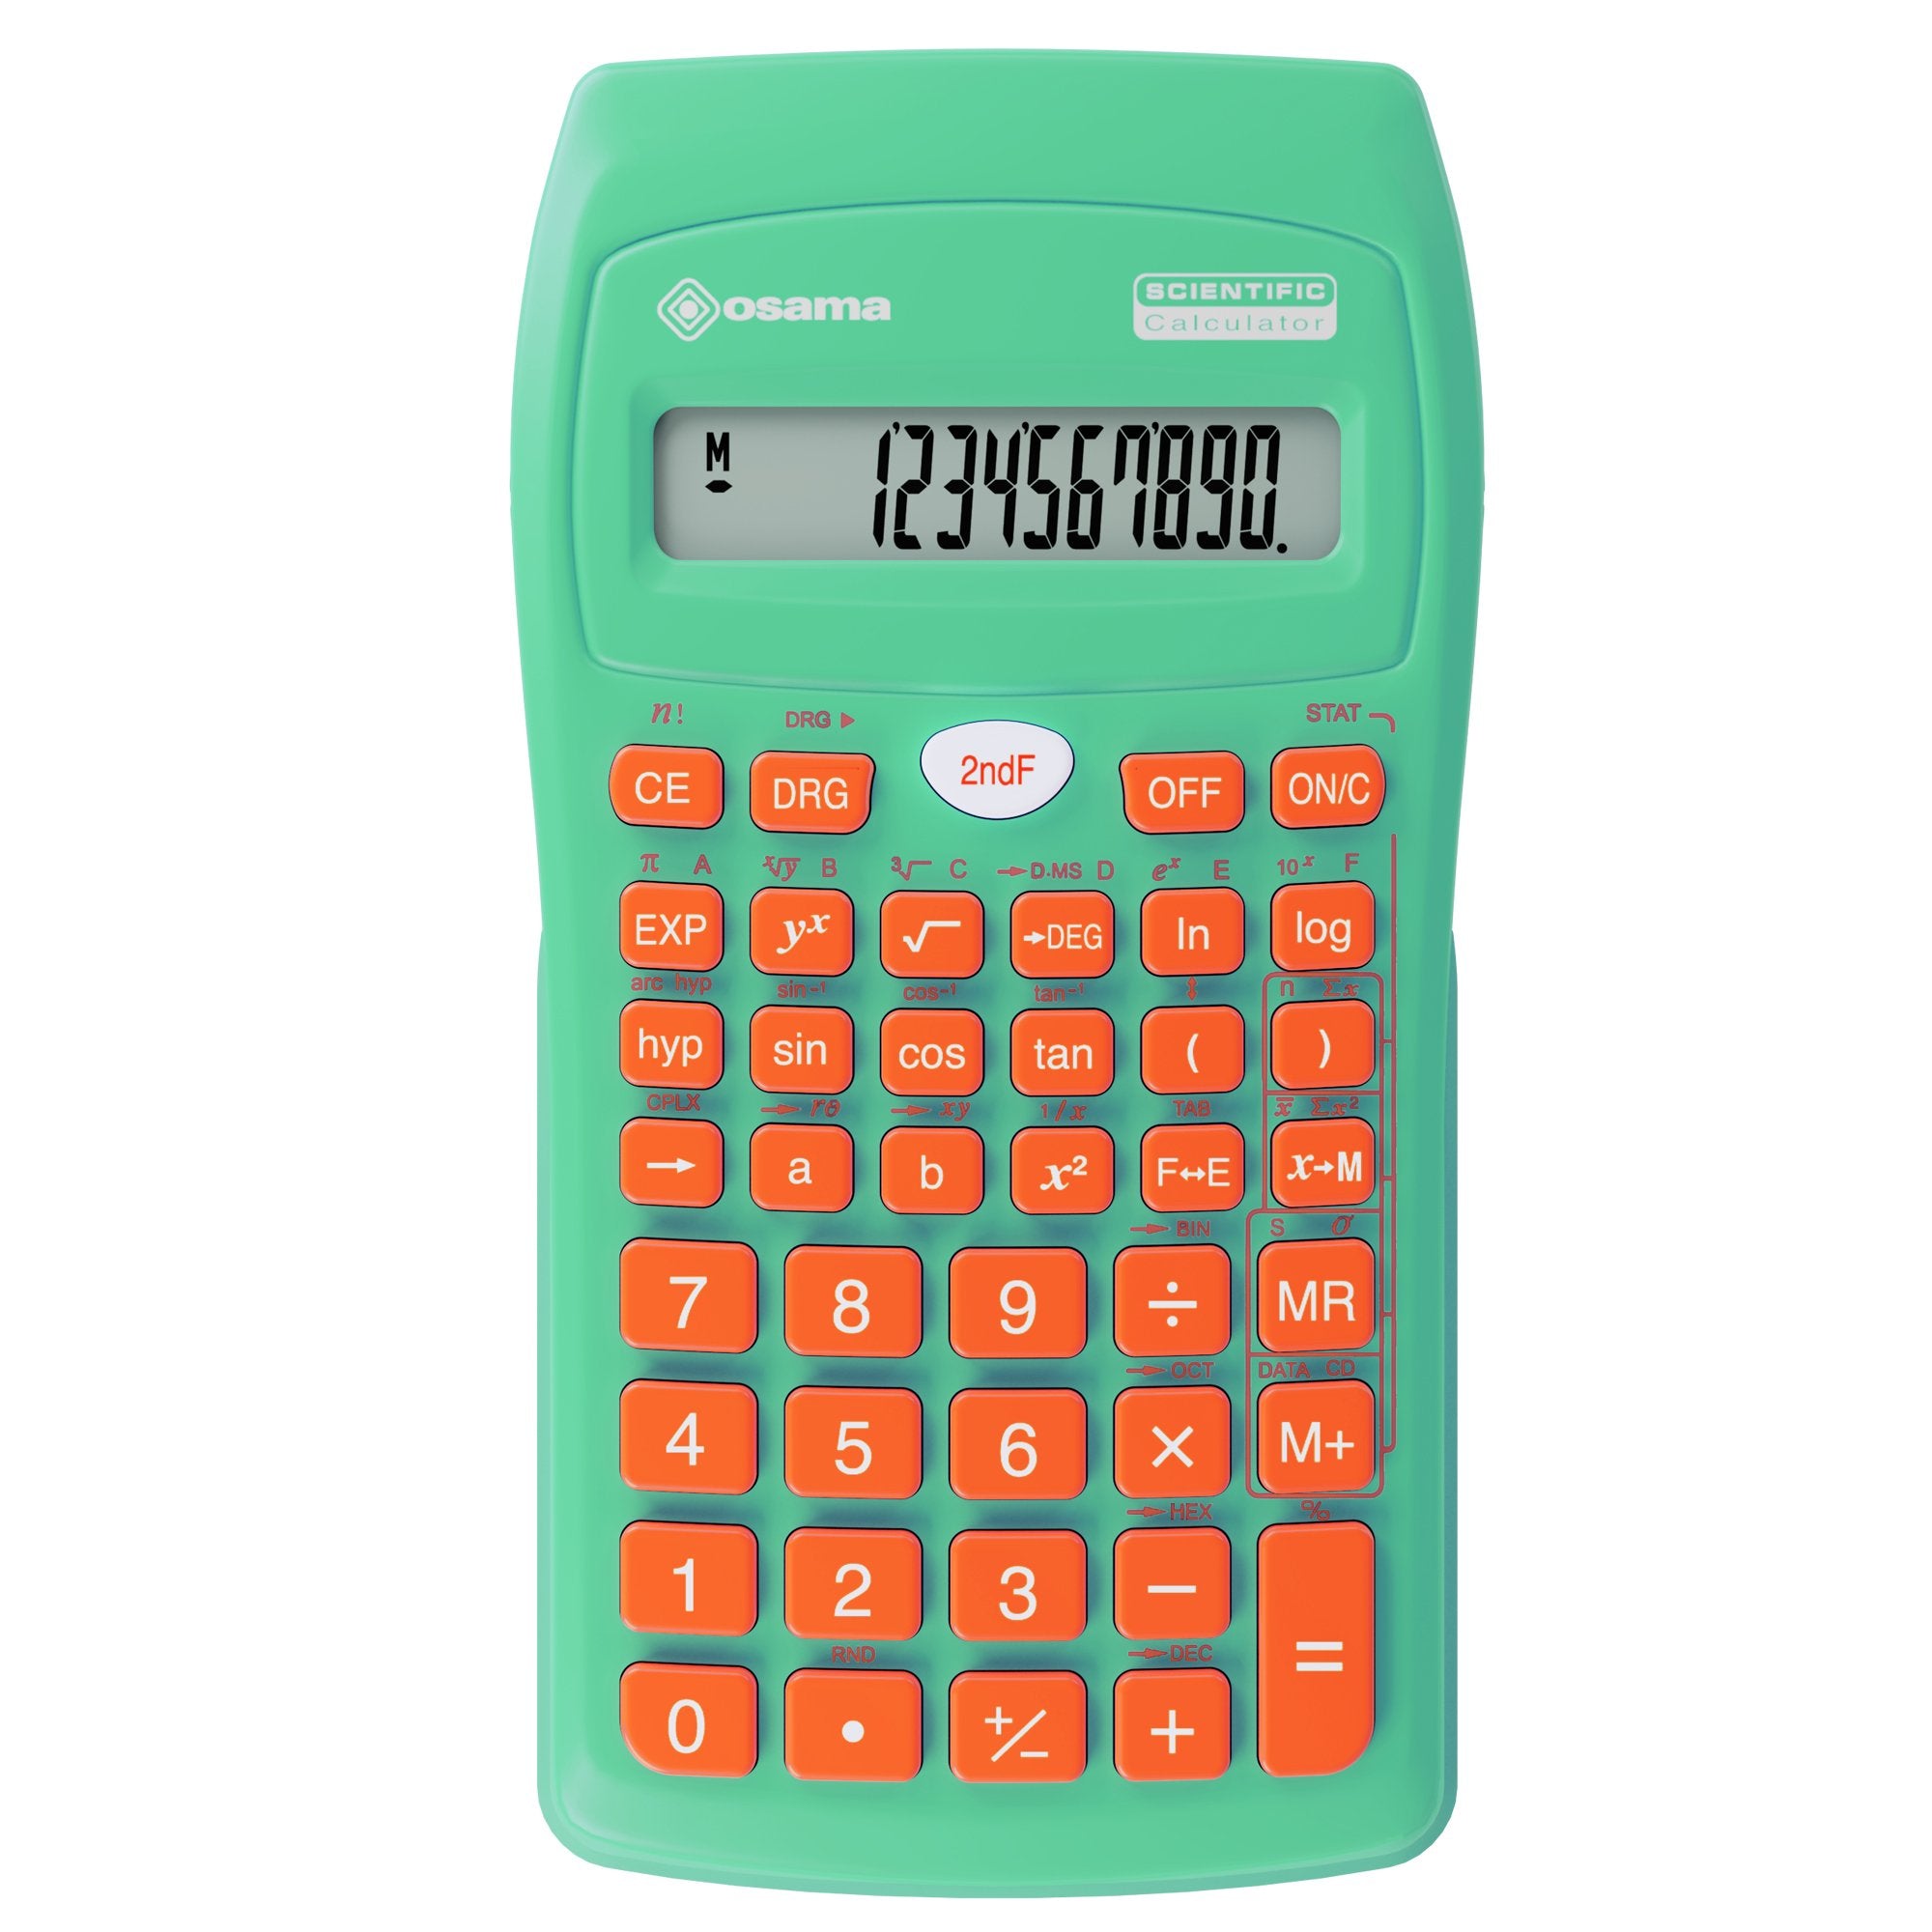 osama-calcolatrice-scientifica-os-134-10-becolor-verde-acqua-tasti-arancio